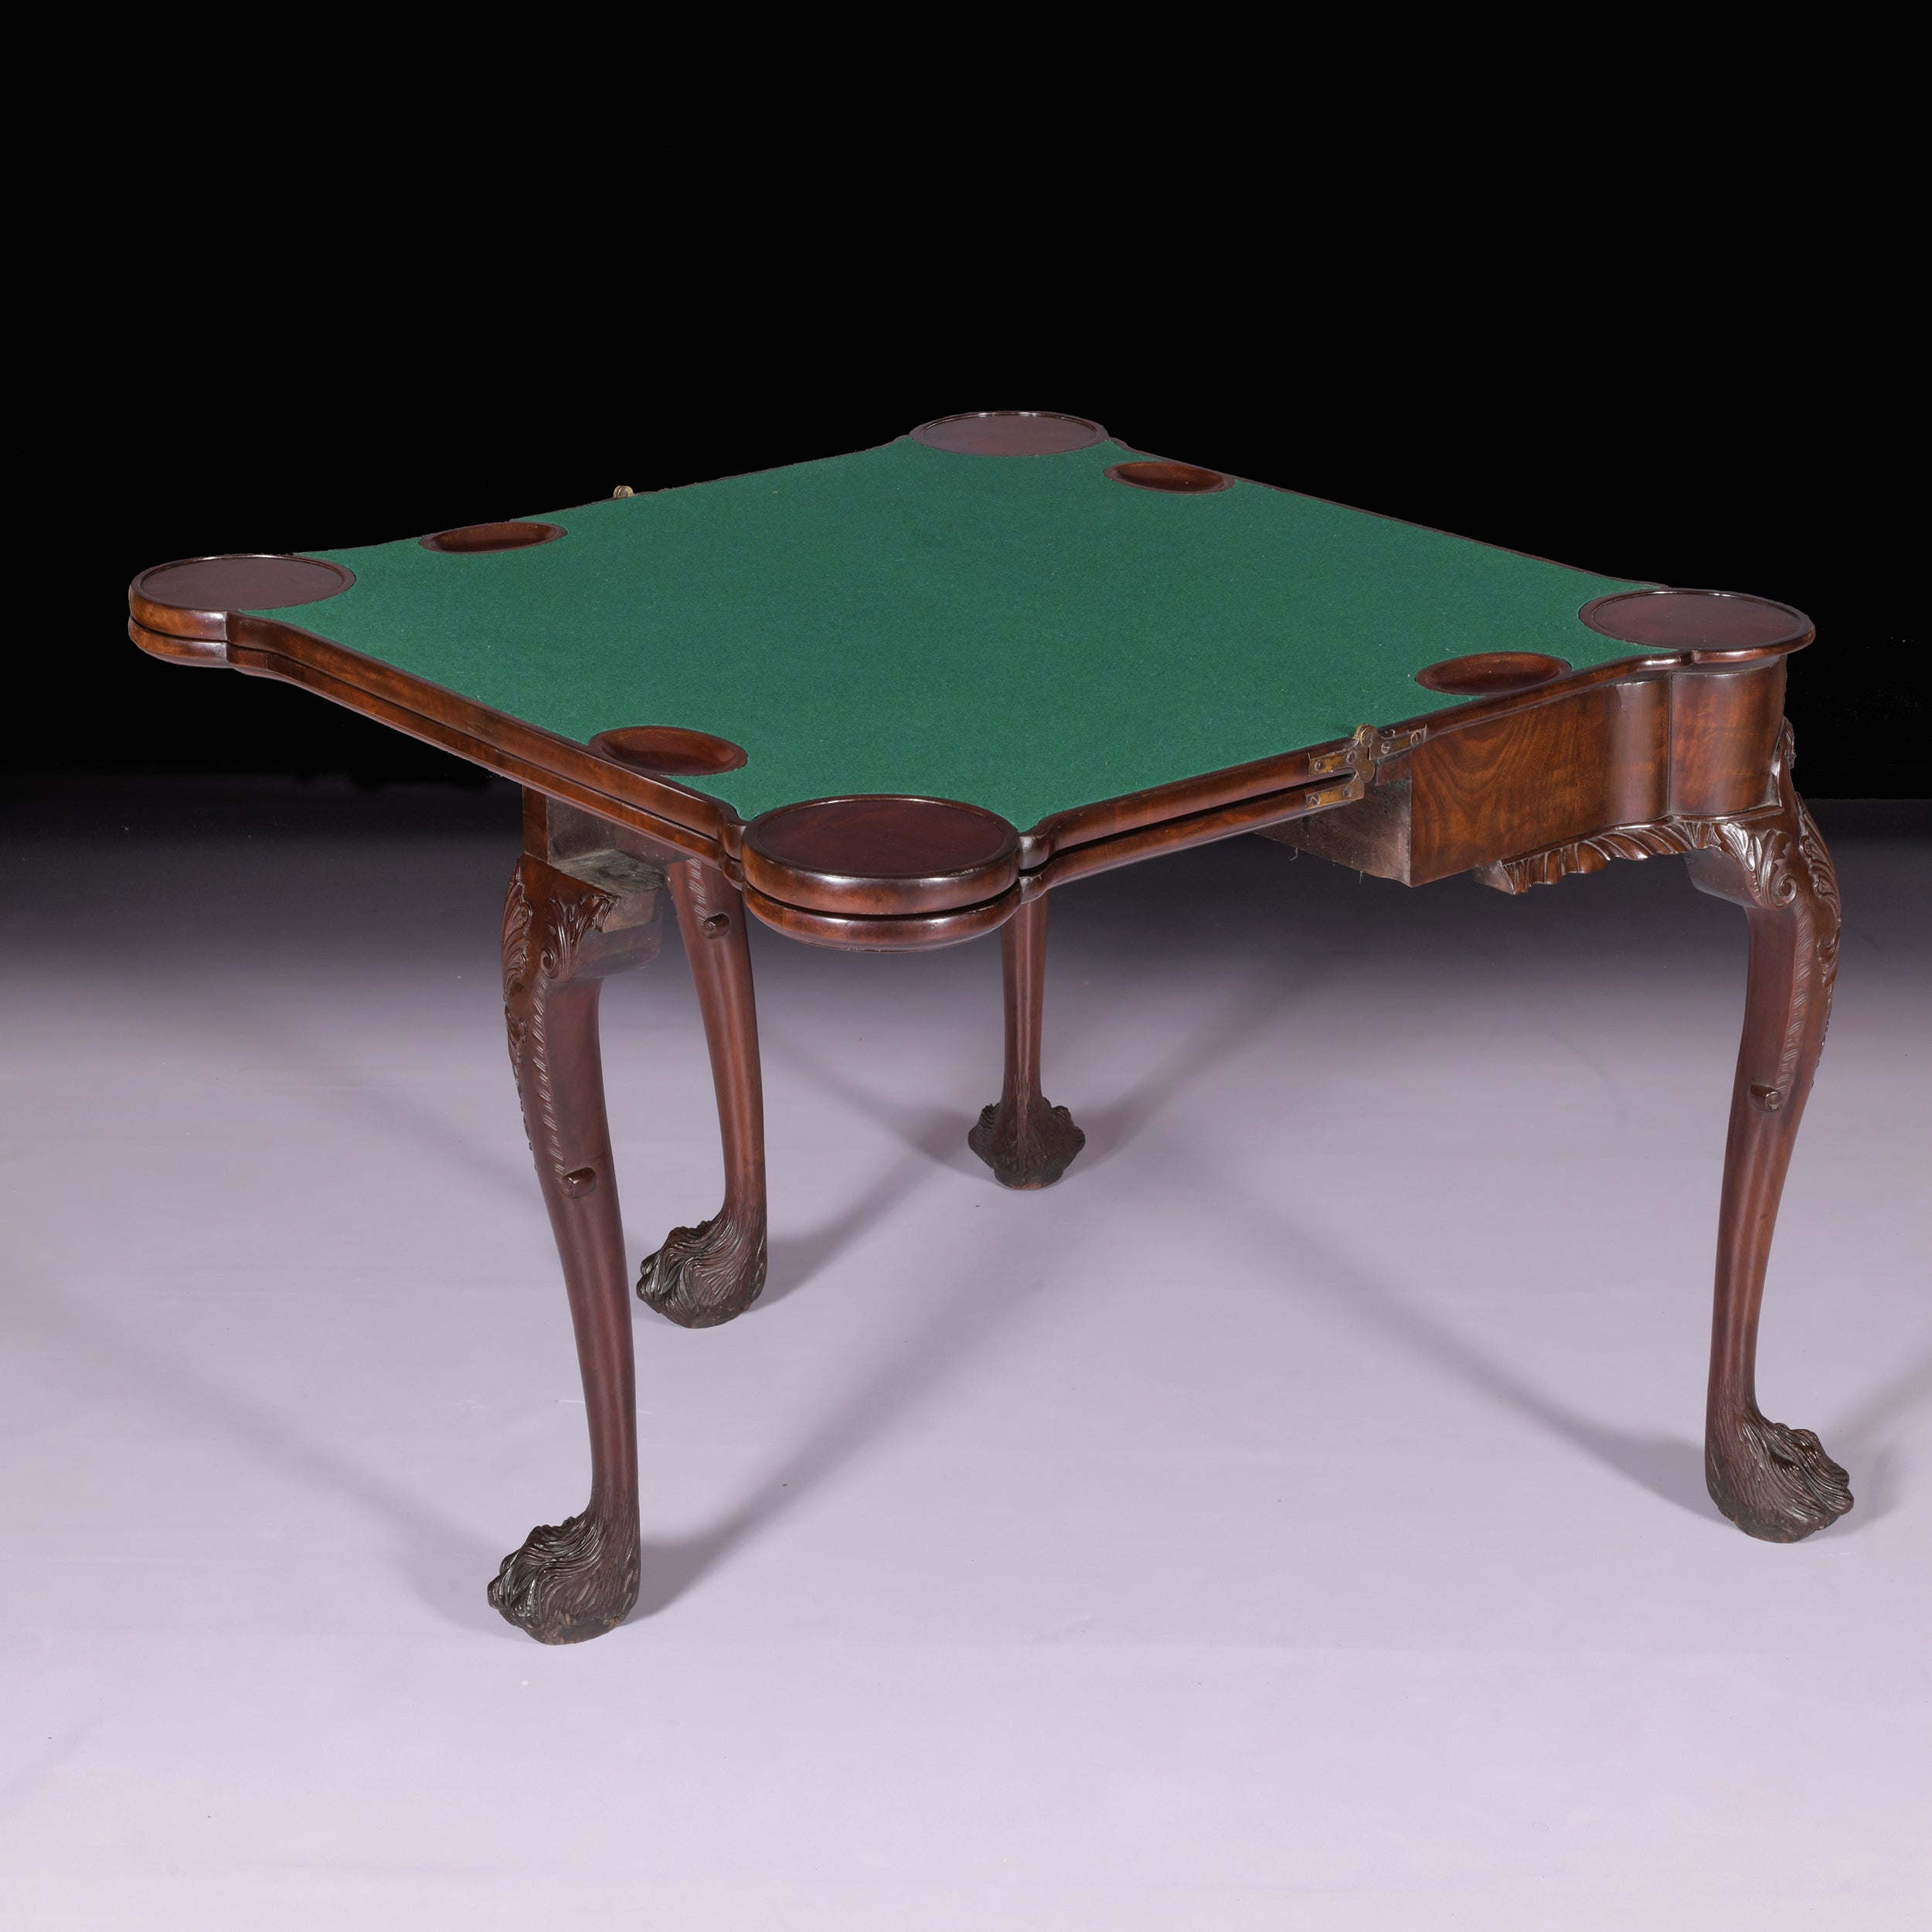 A MAGNIFICENT 19TH CENTURY IRISH GAMES TABLE - REF No. 9007